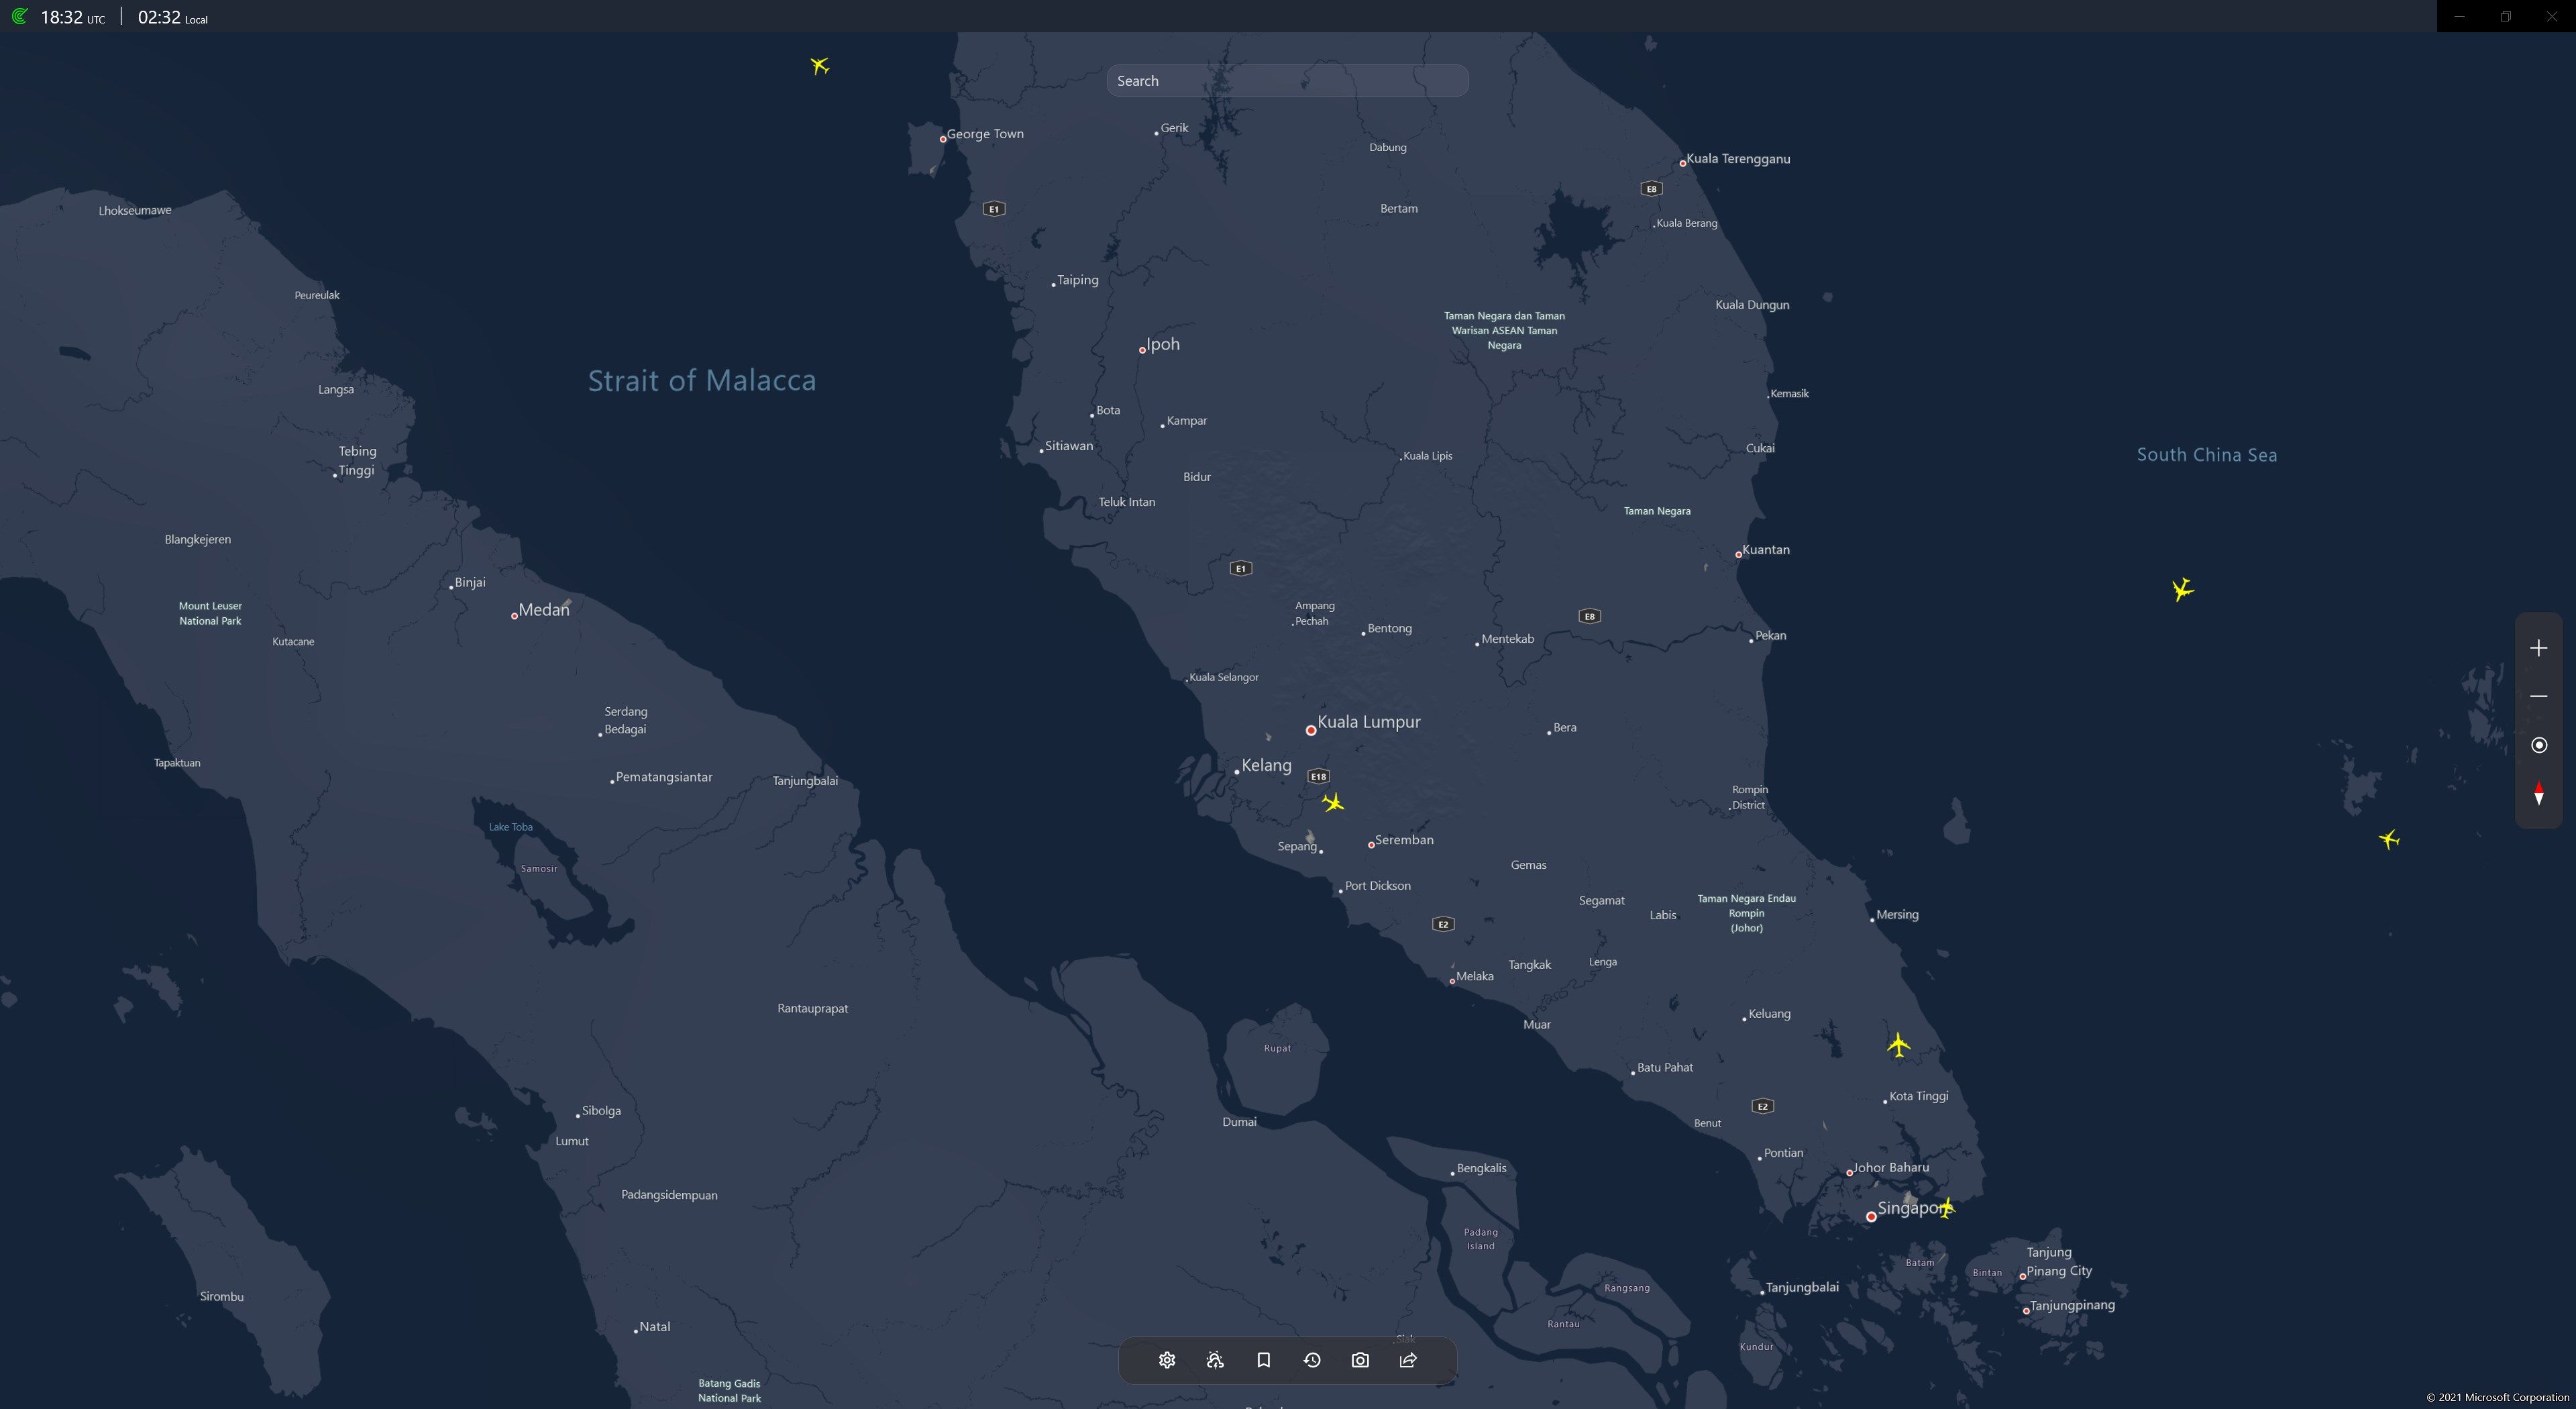 Air traffic around the user location.